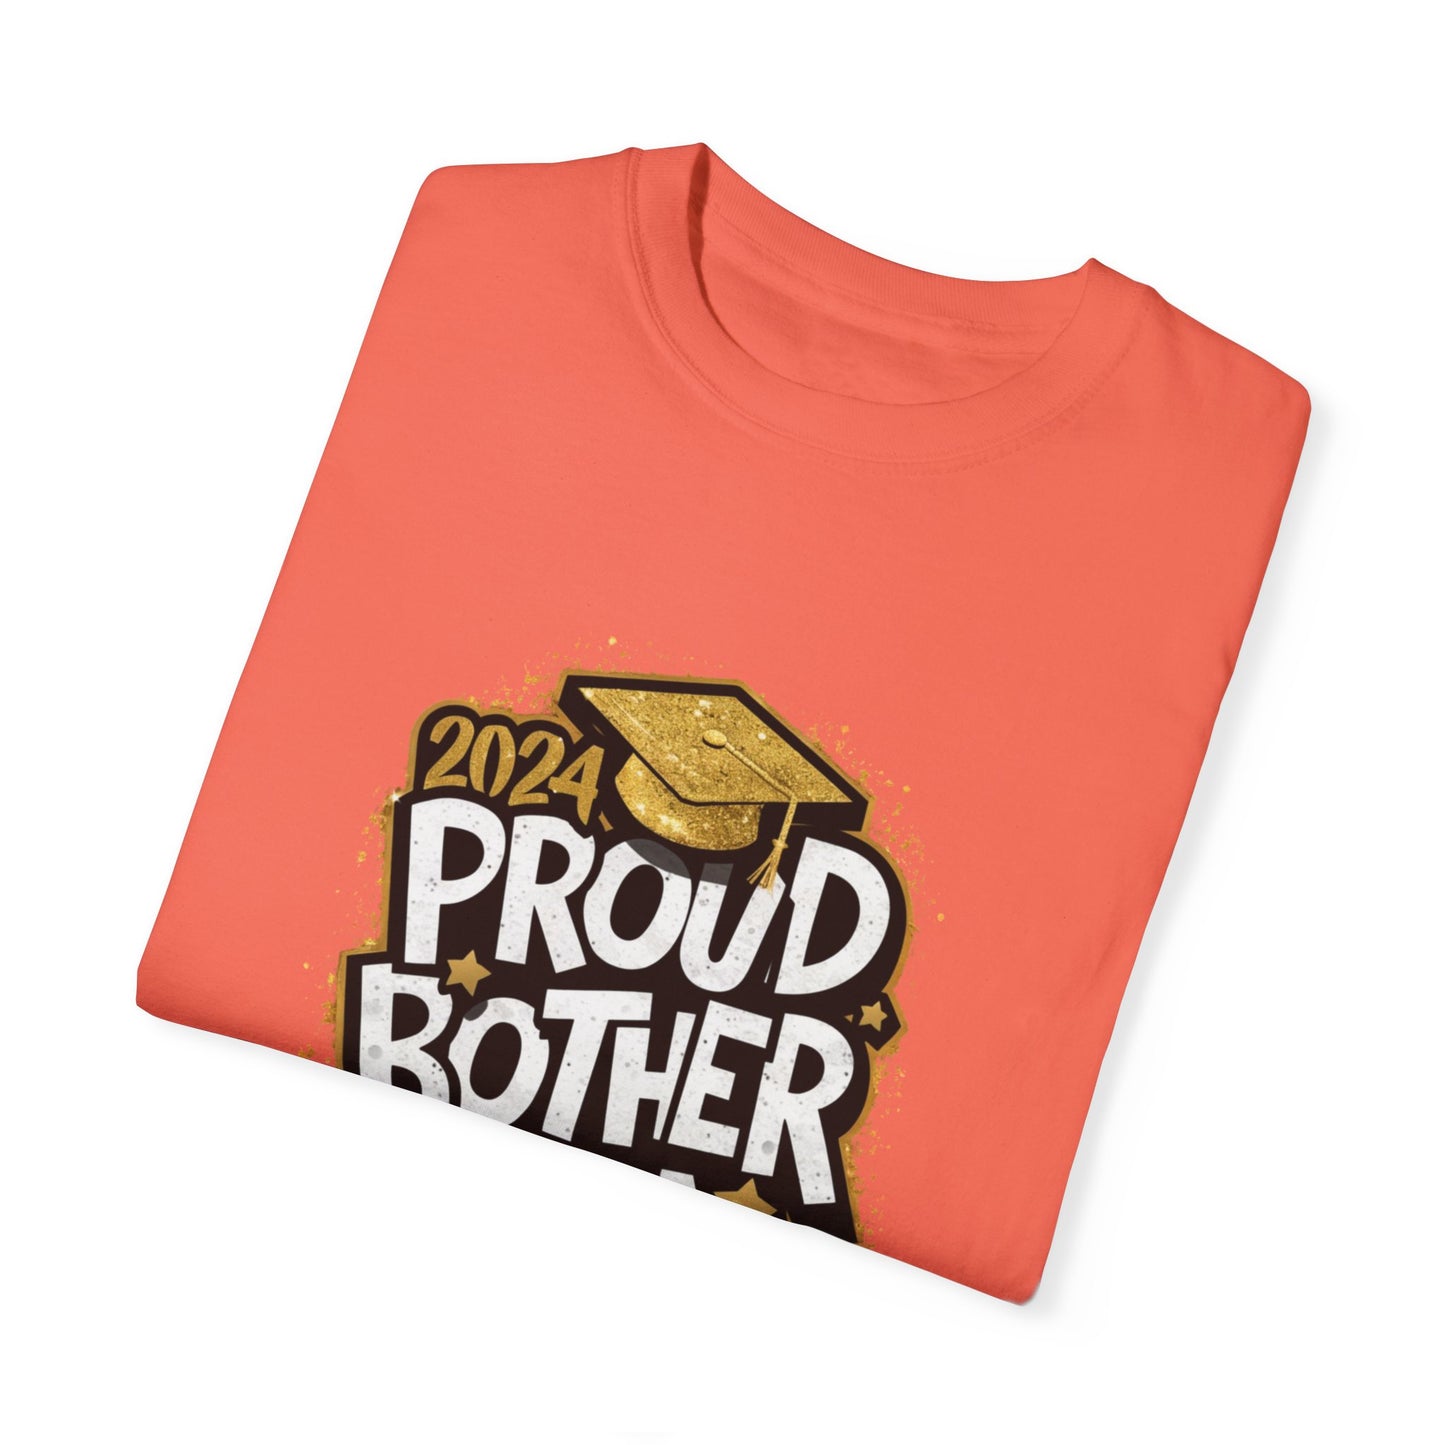 Proud Brother of a 2024 Graduate Unisex Garment-dyed T-shirt Cotton Funny Humorous Graphic Soft Premium Unisex Men Women Bright Salmon T-shirt Birthday Gift-32